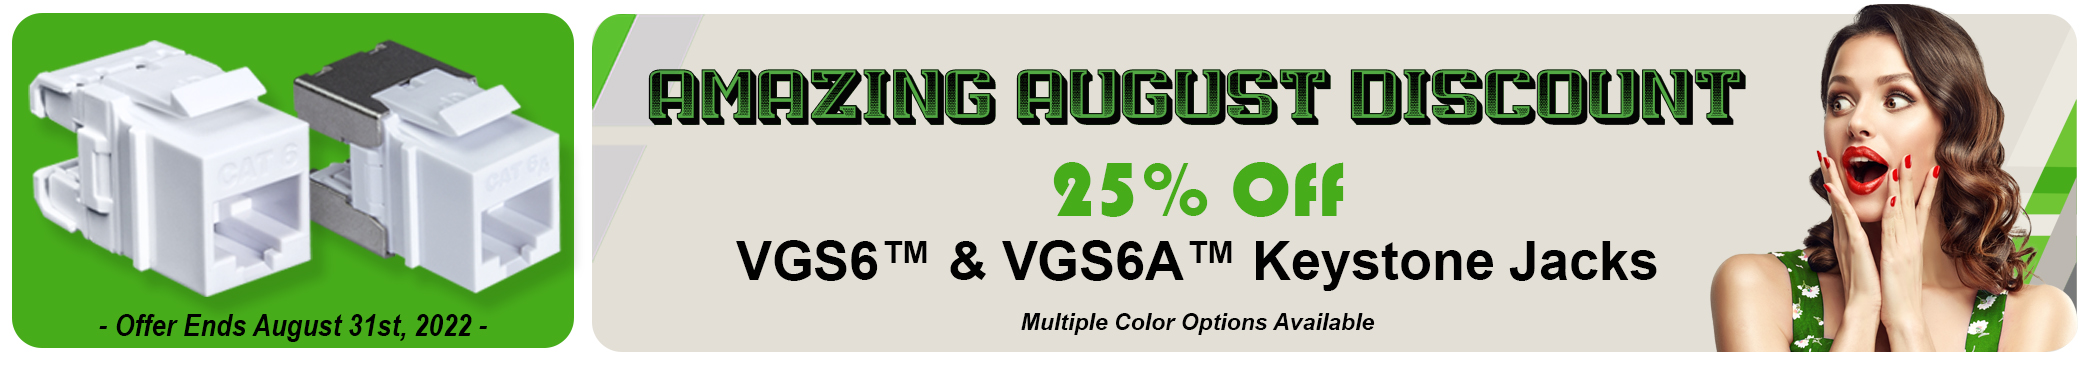 AUGUST 2022 PROMO: 25% OFF VGS6™ & VGS6A™ KEYSTONE JACKS